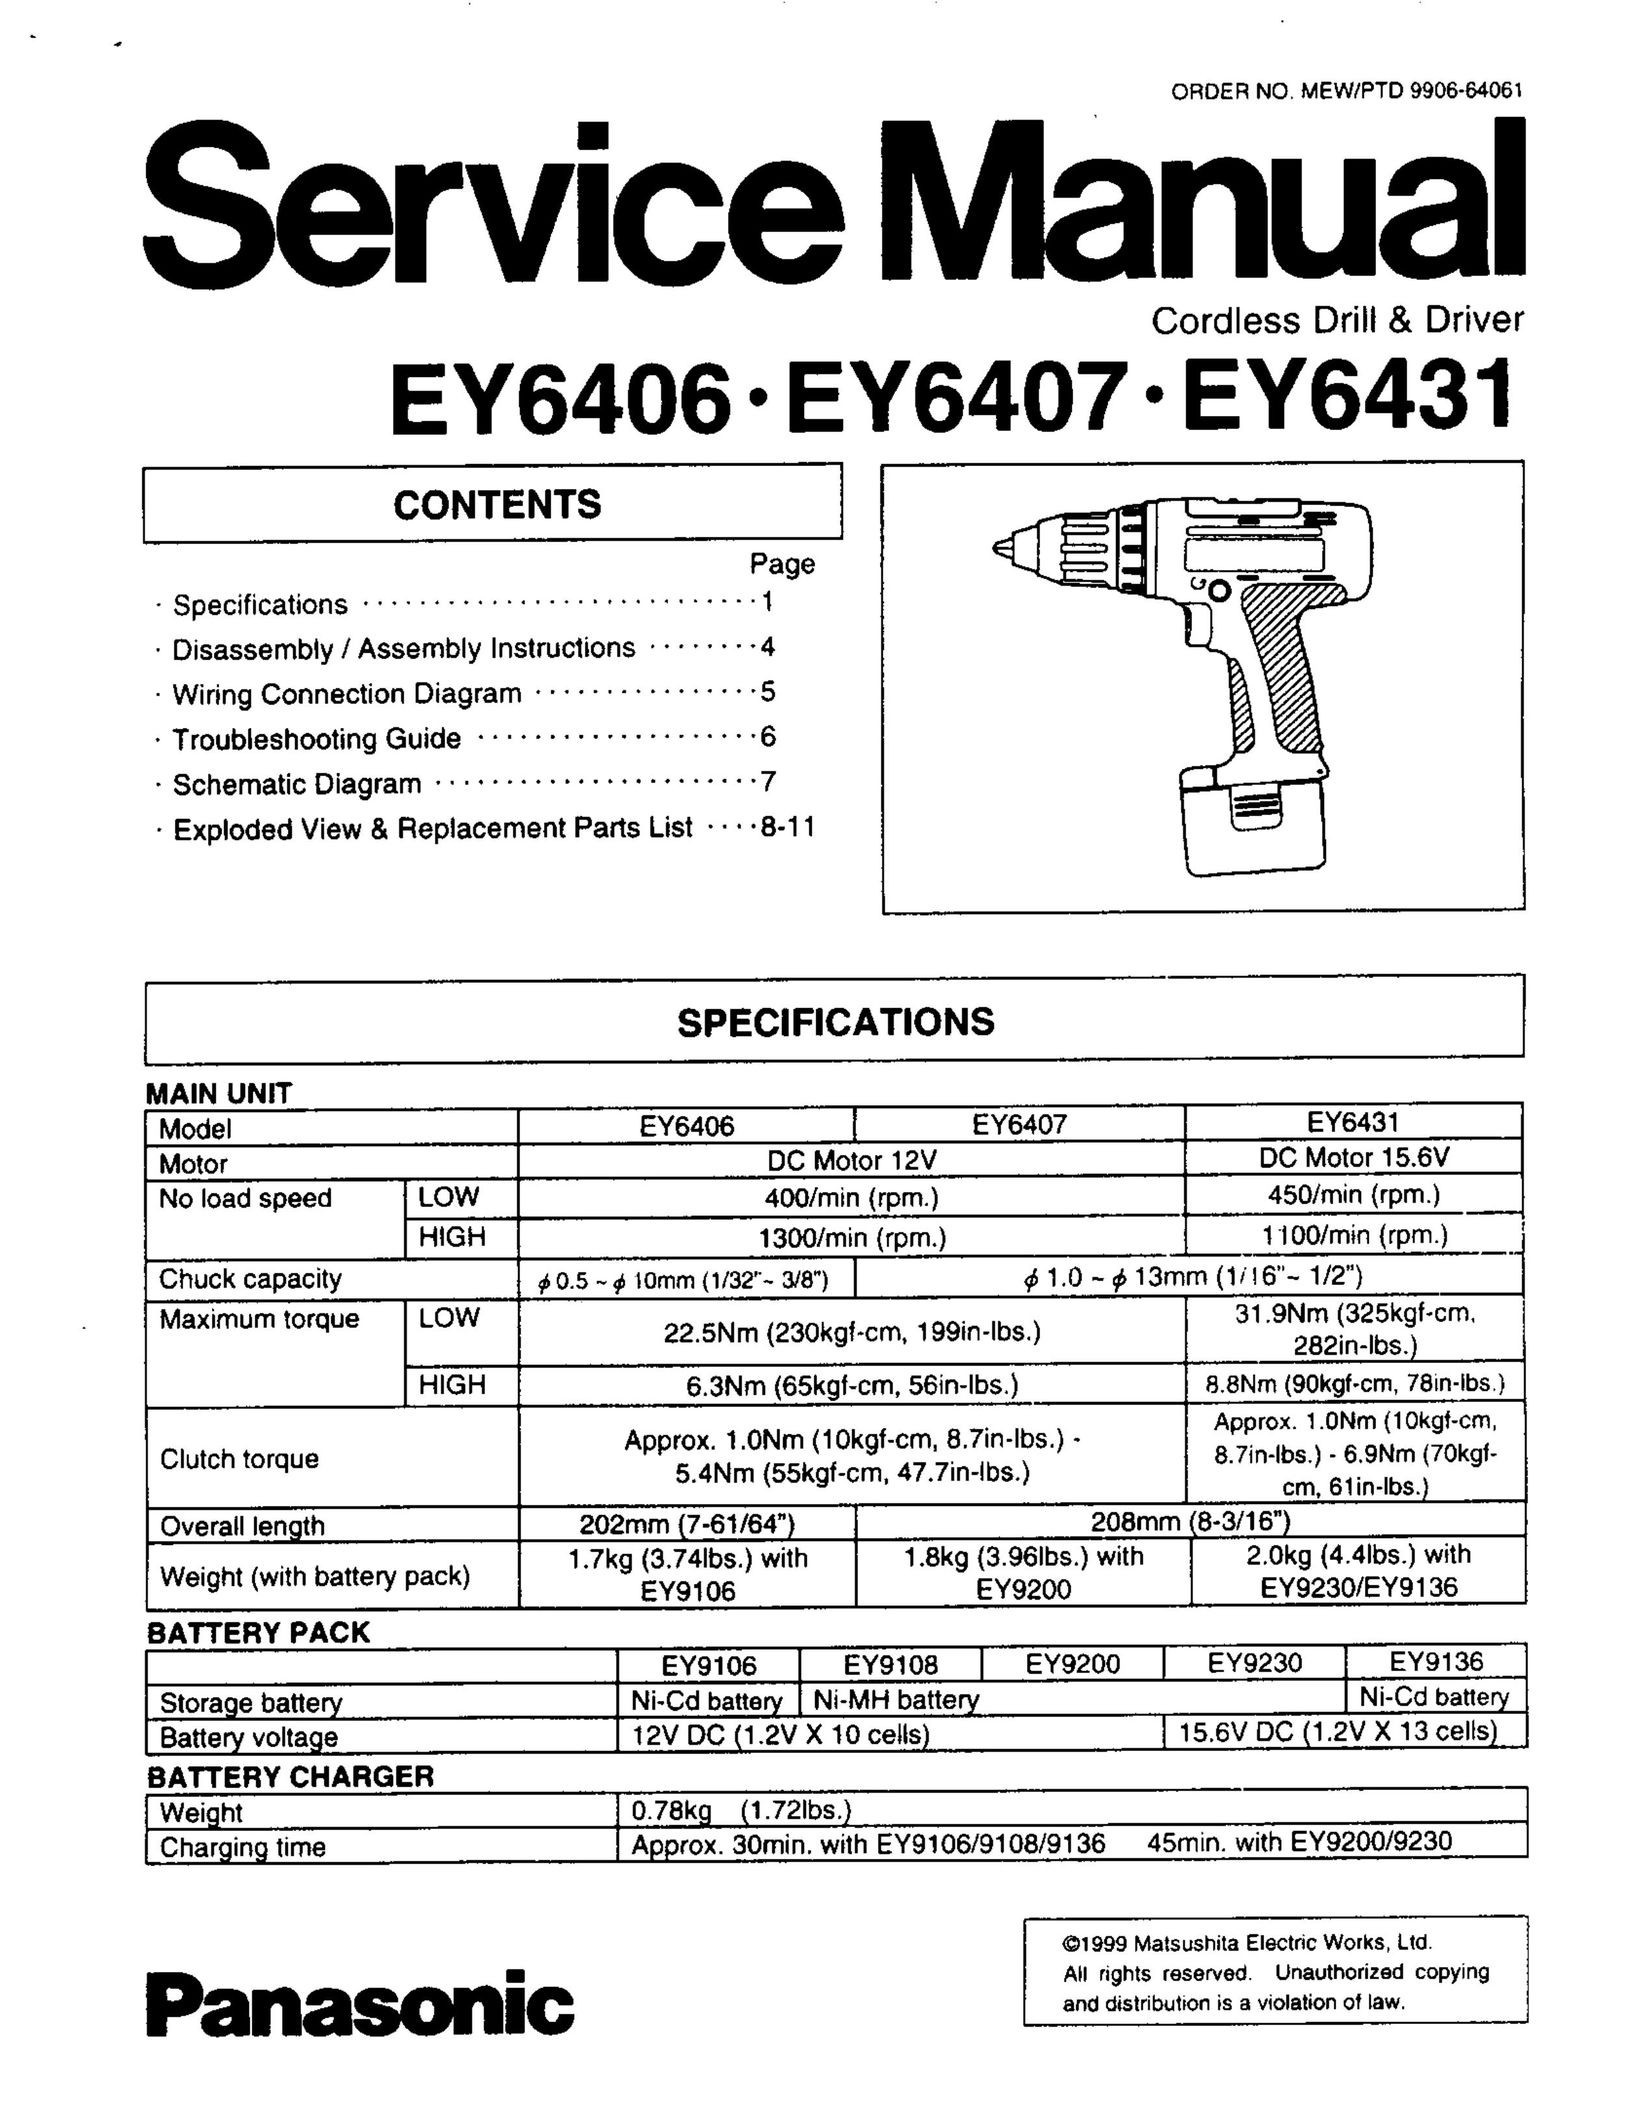 Panasonic EY6407 Cordless Drill User Manual